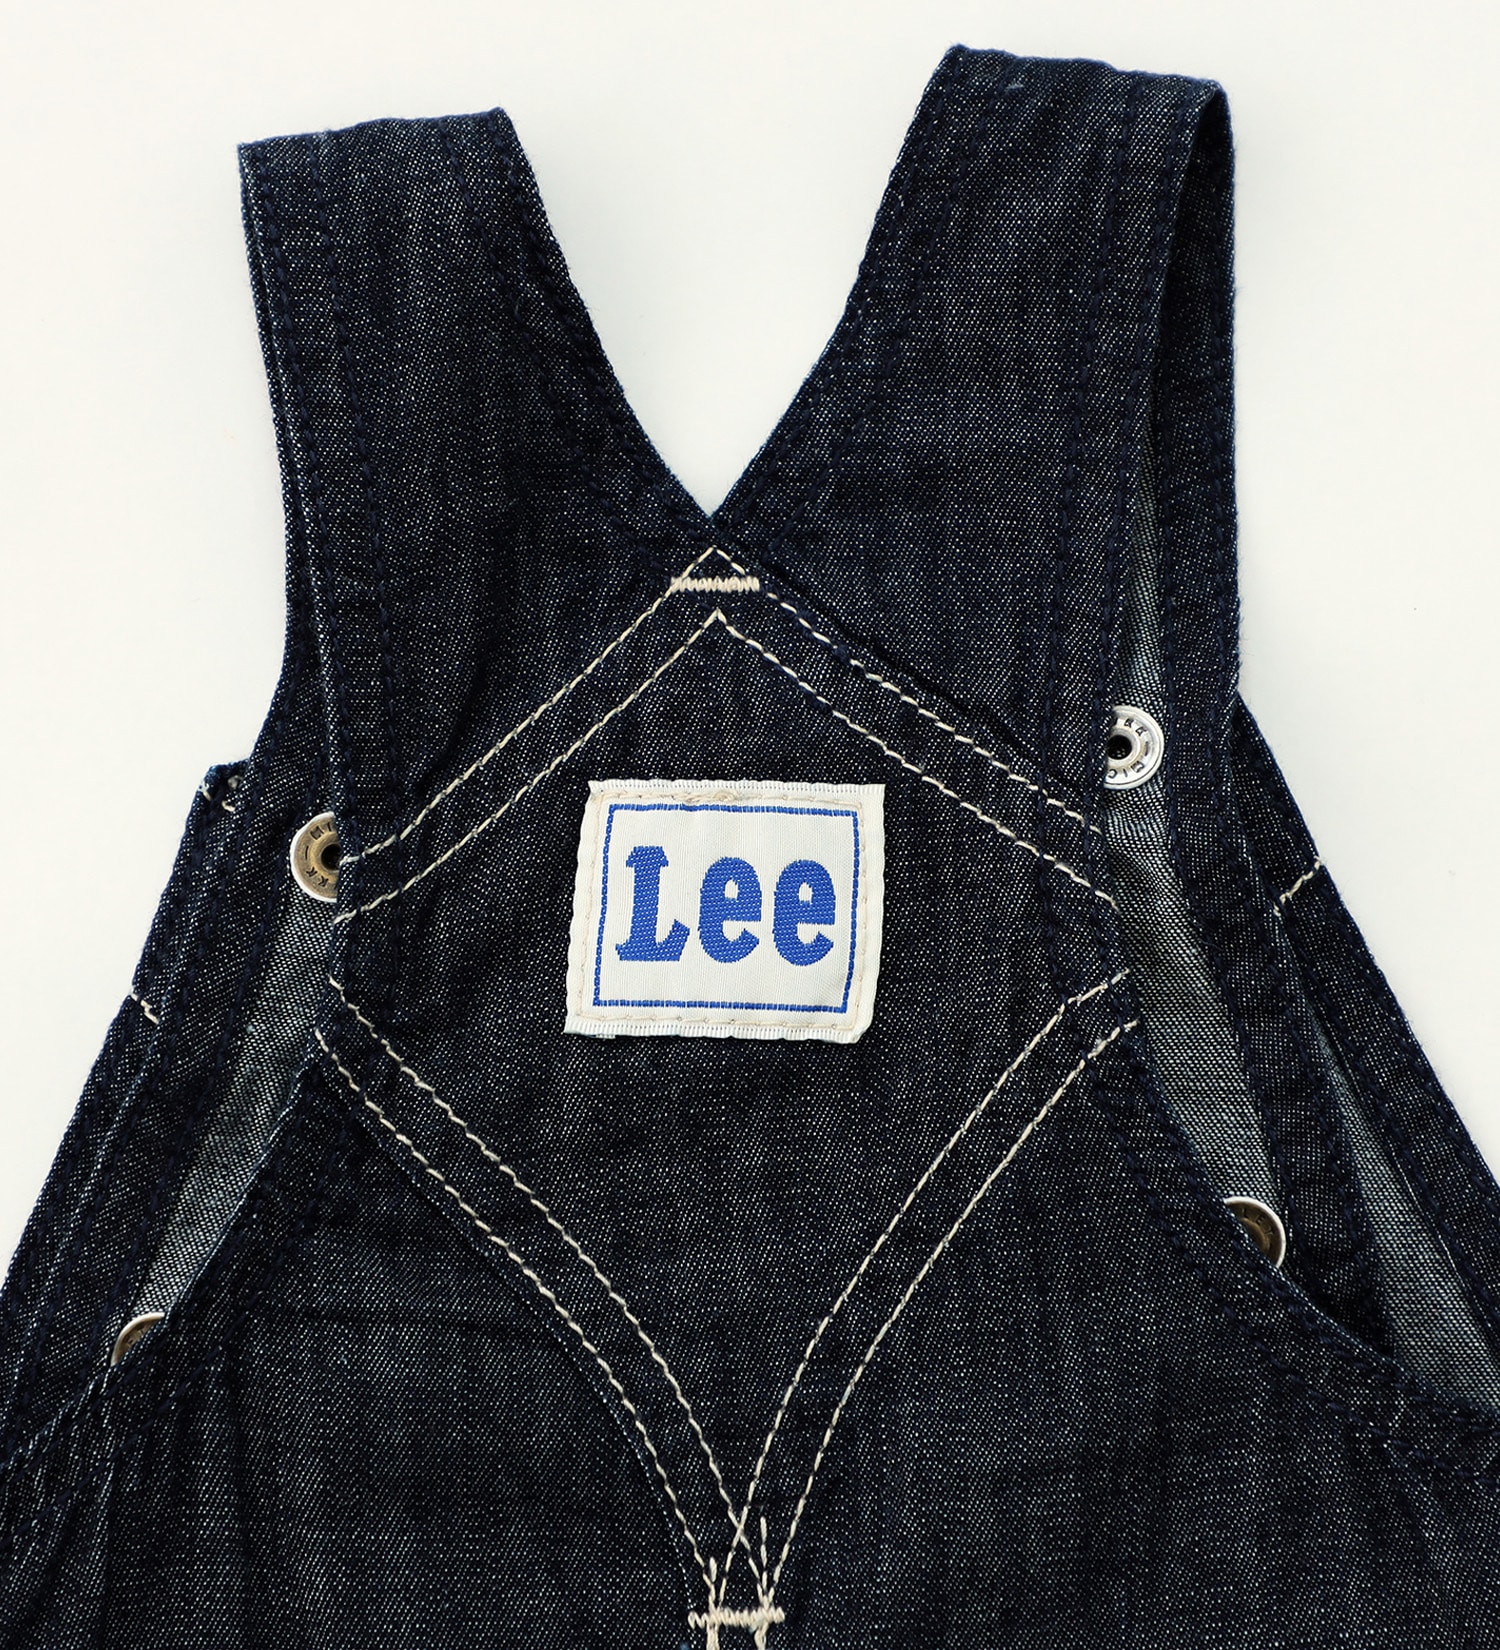 Lee(リー)の【70-90cm】ベビー ファーストデニムオーバーオールスカート|オールインワン/ジャンパースカート/キッズ|インディゴブルー